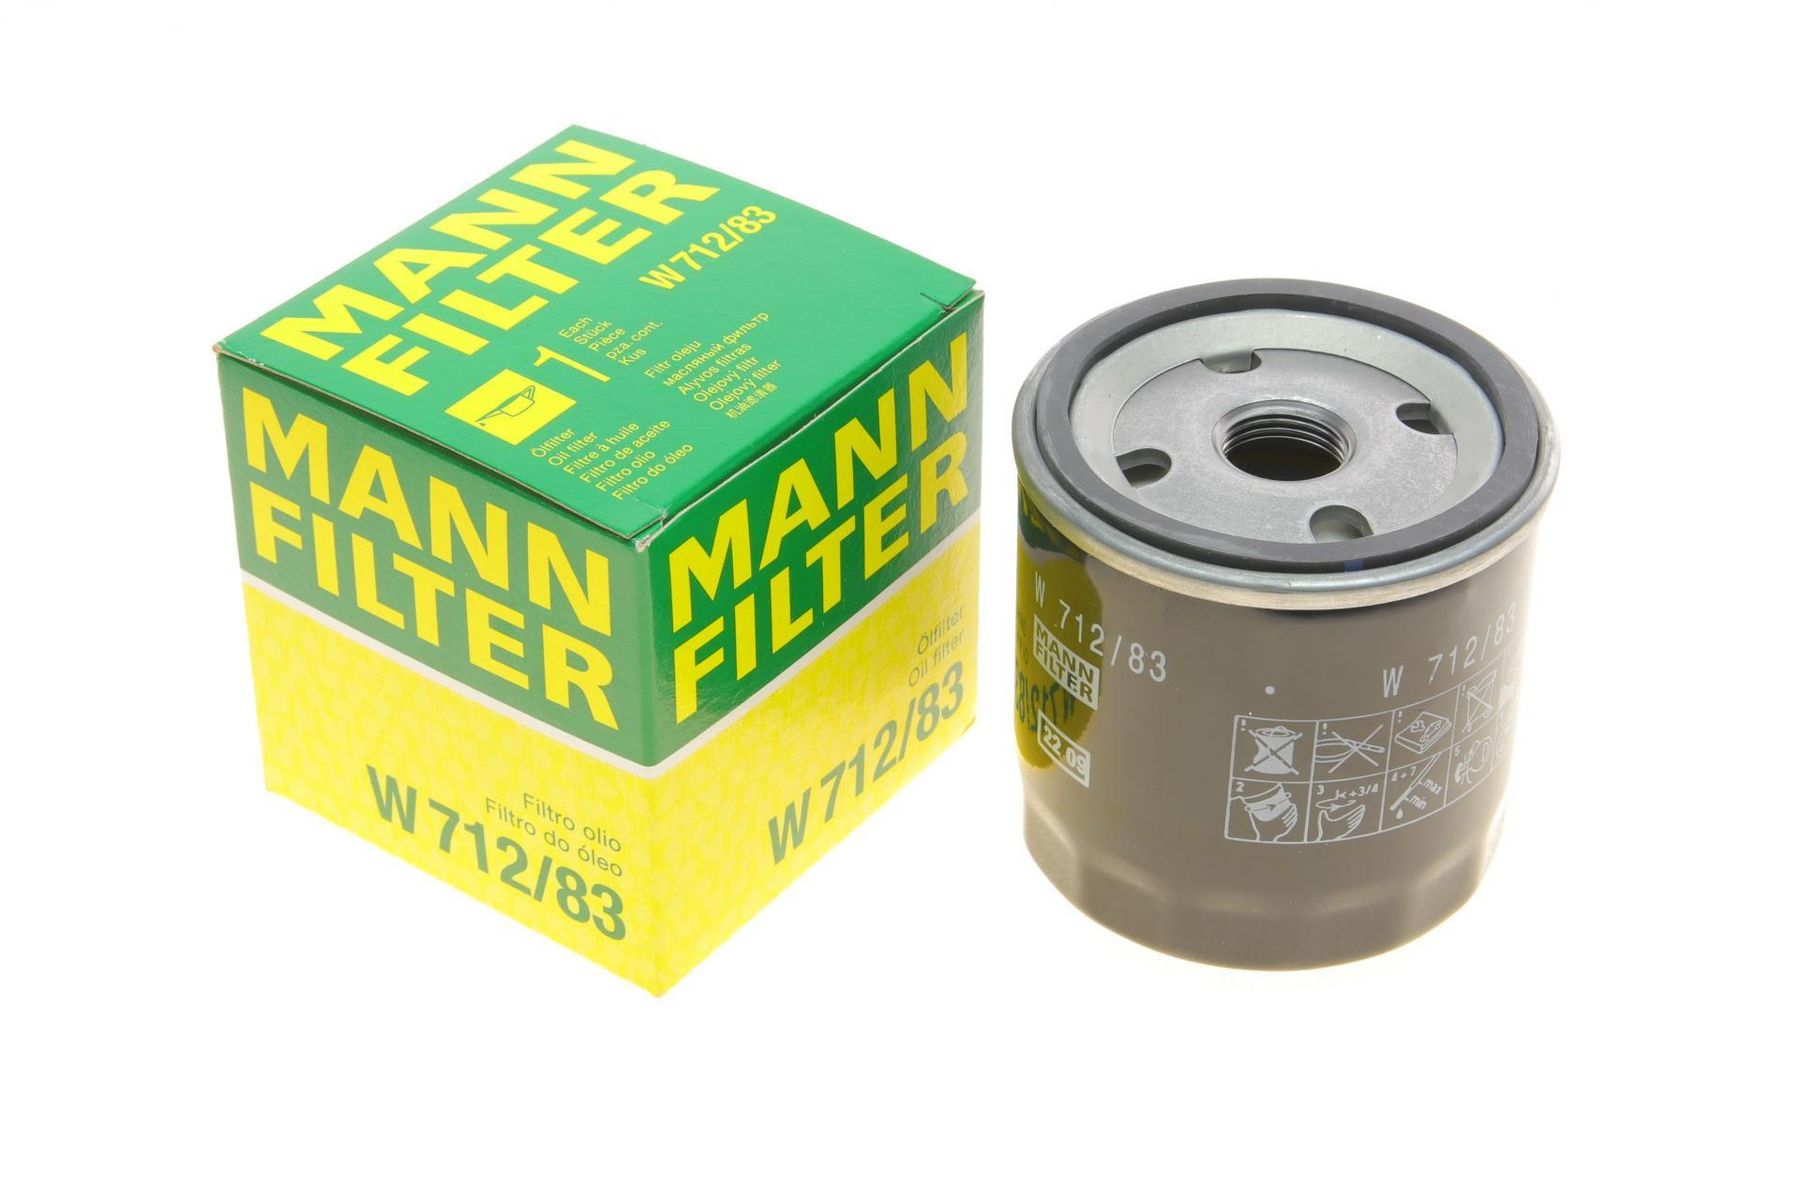 Filtre à huile MANN-FILTER W 712/83